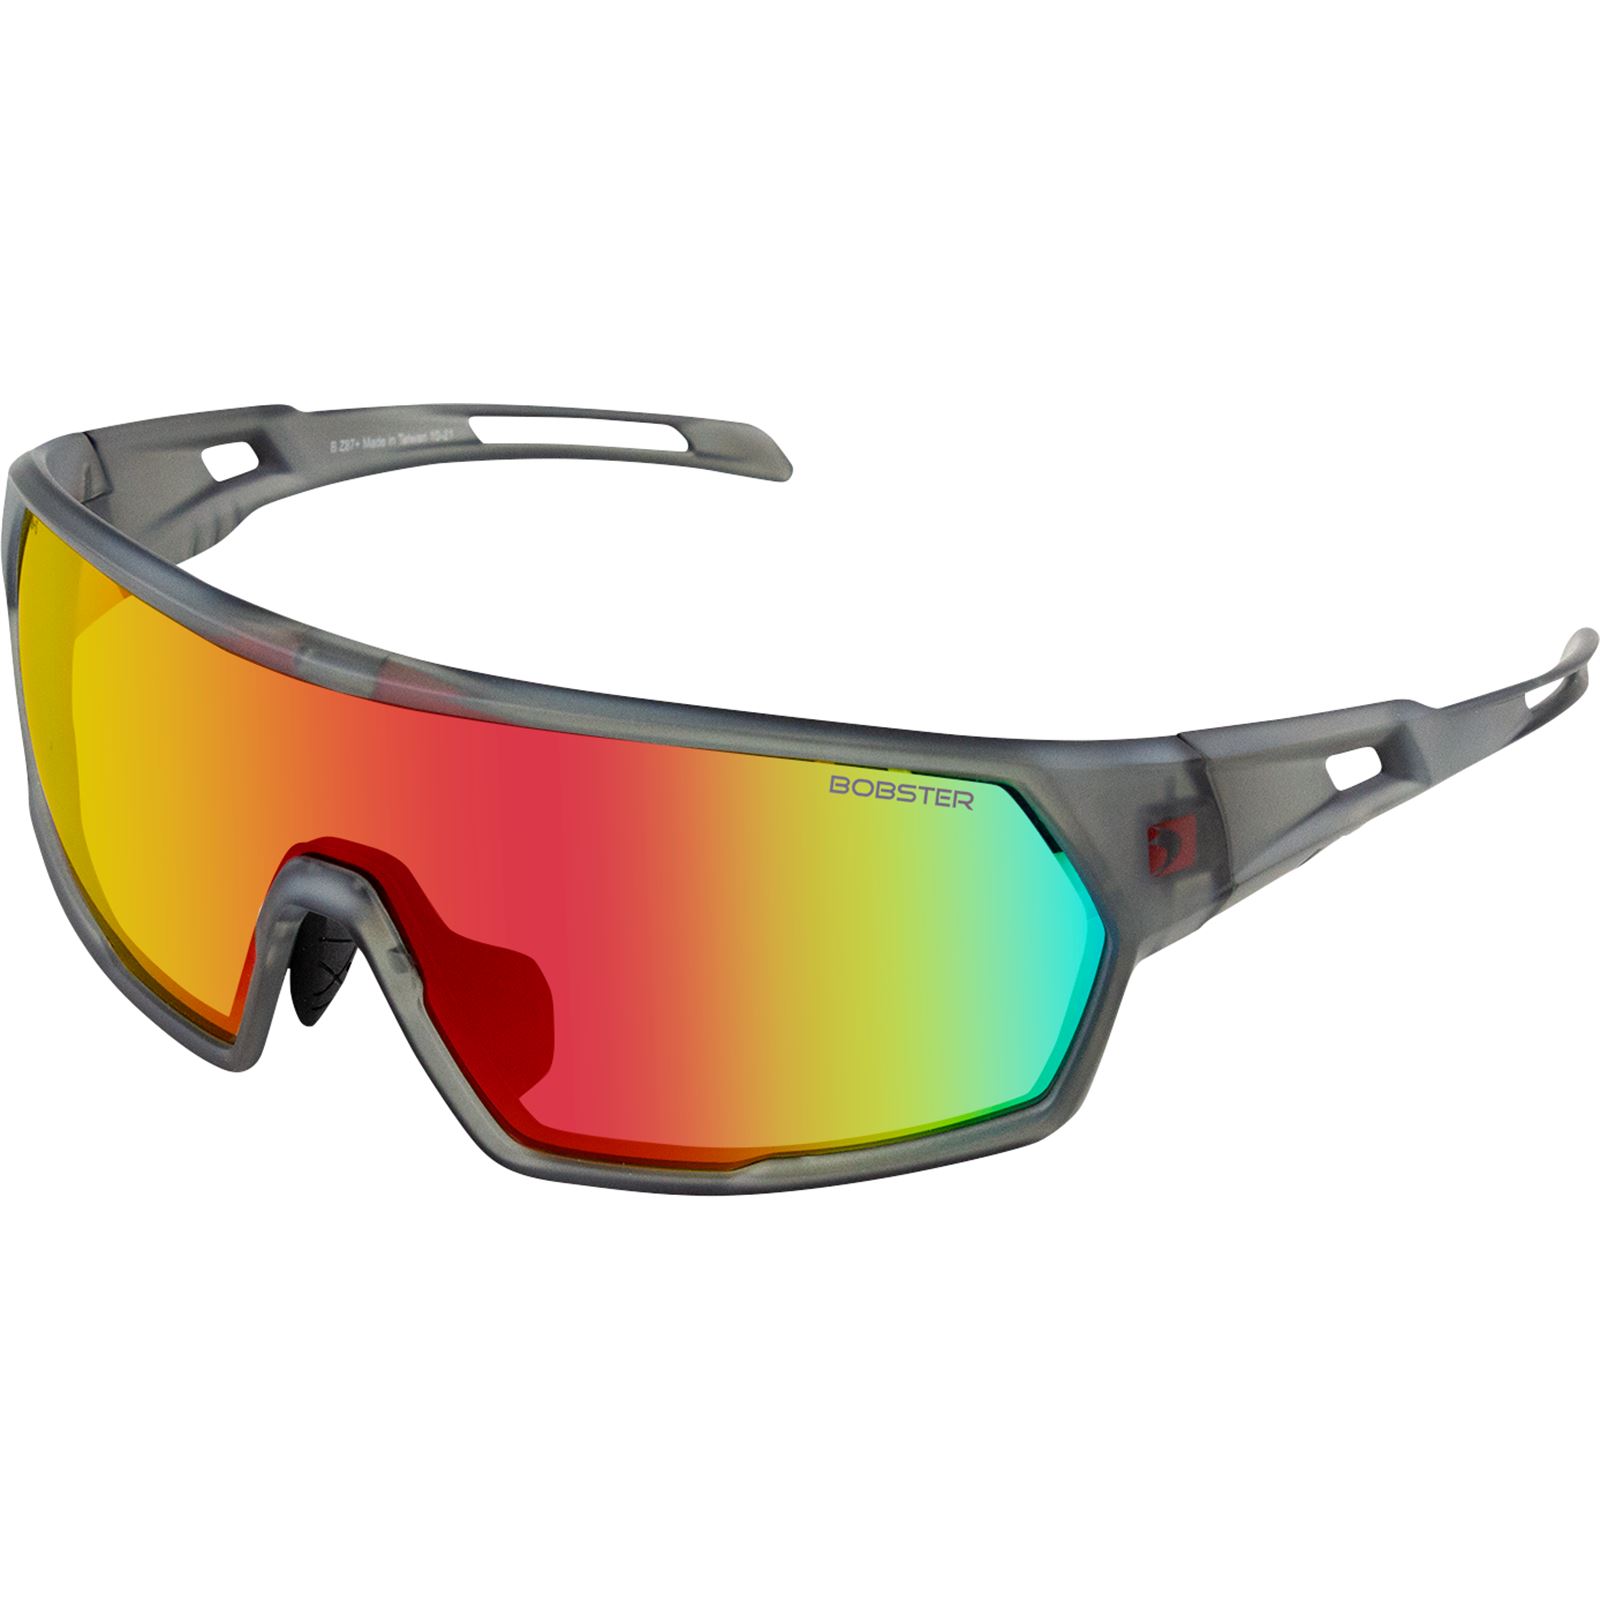 Bobster Speed Sunglasses - Matte Clear Gray - Smoke Crimson Mirror